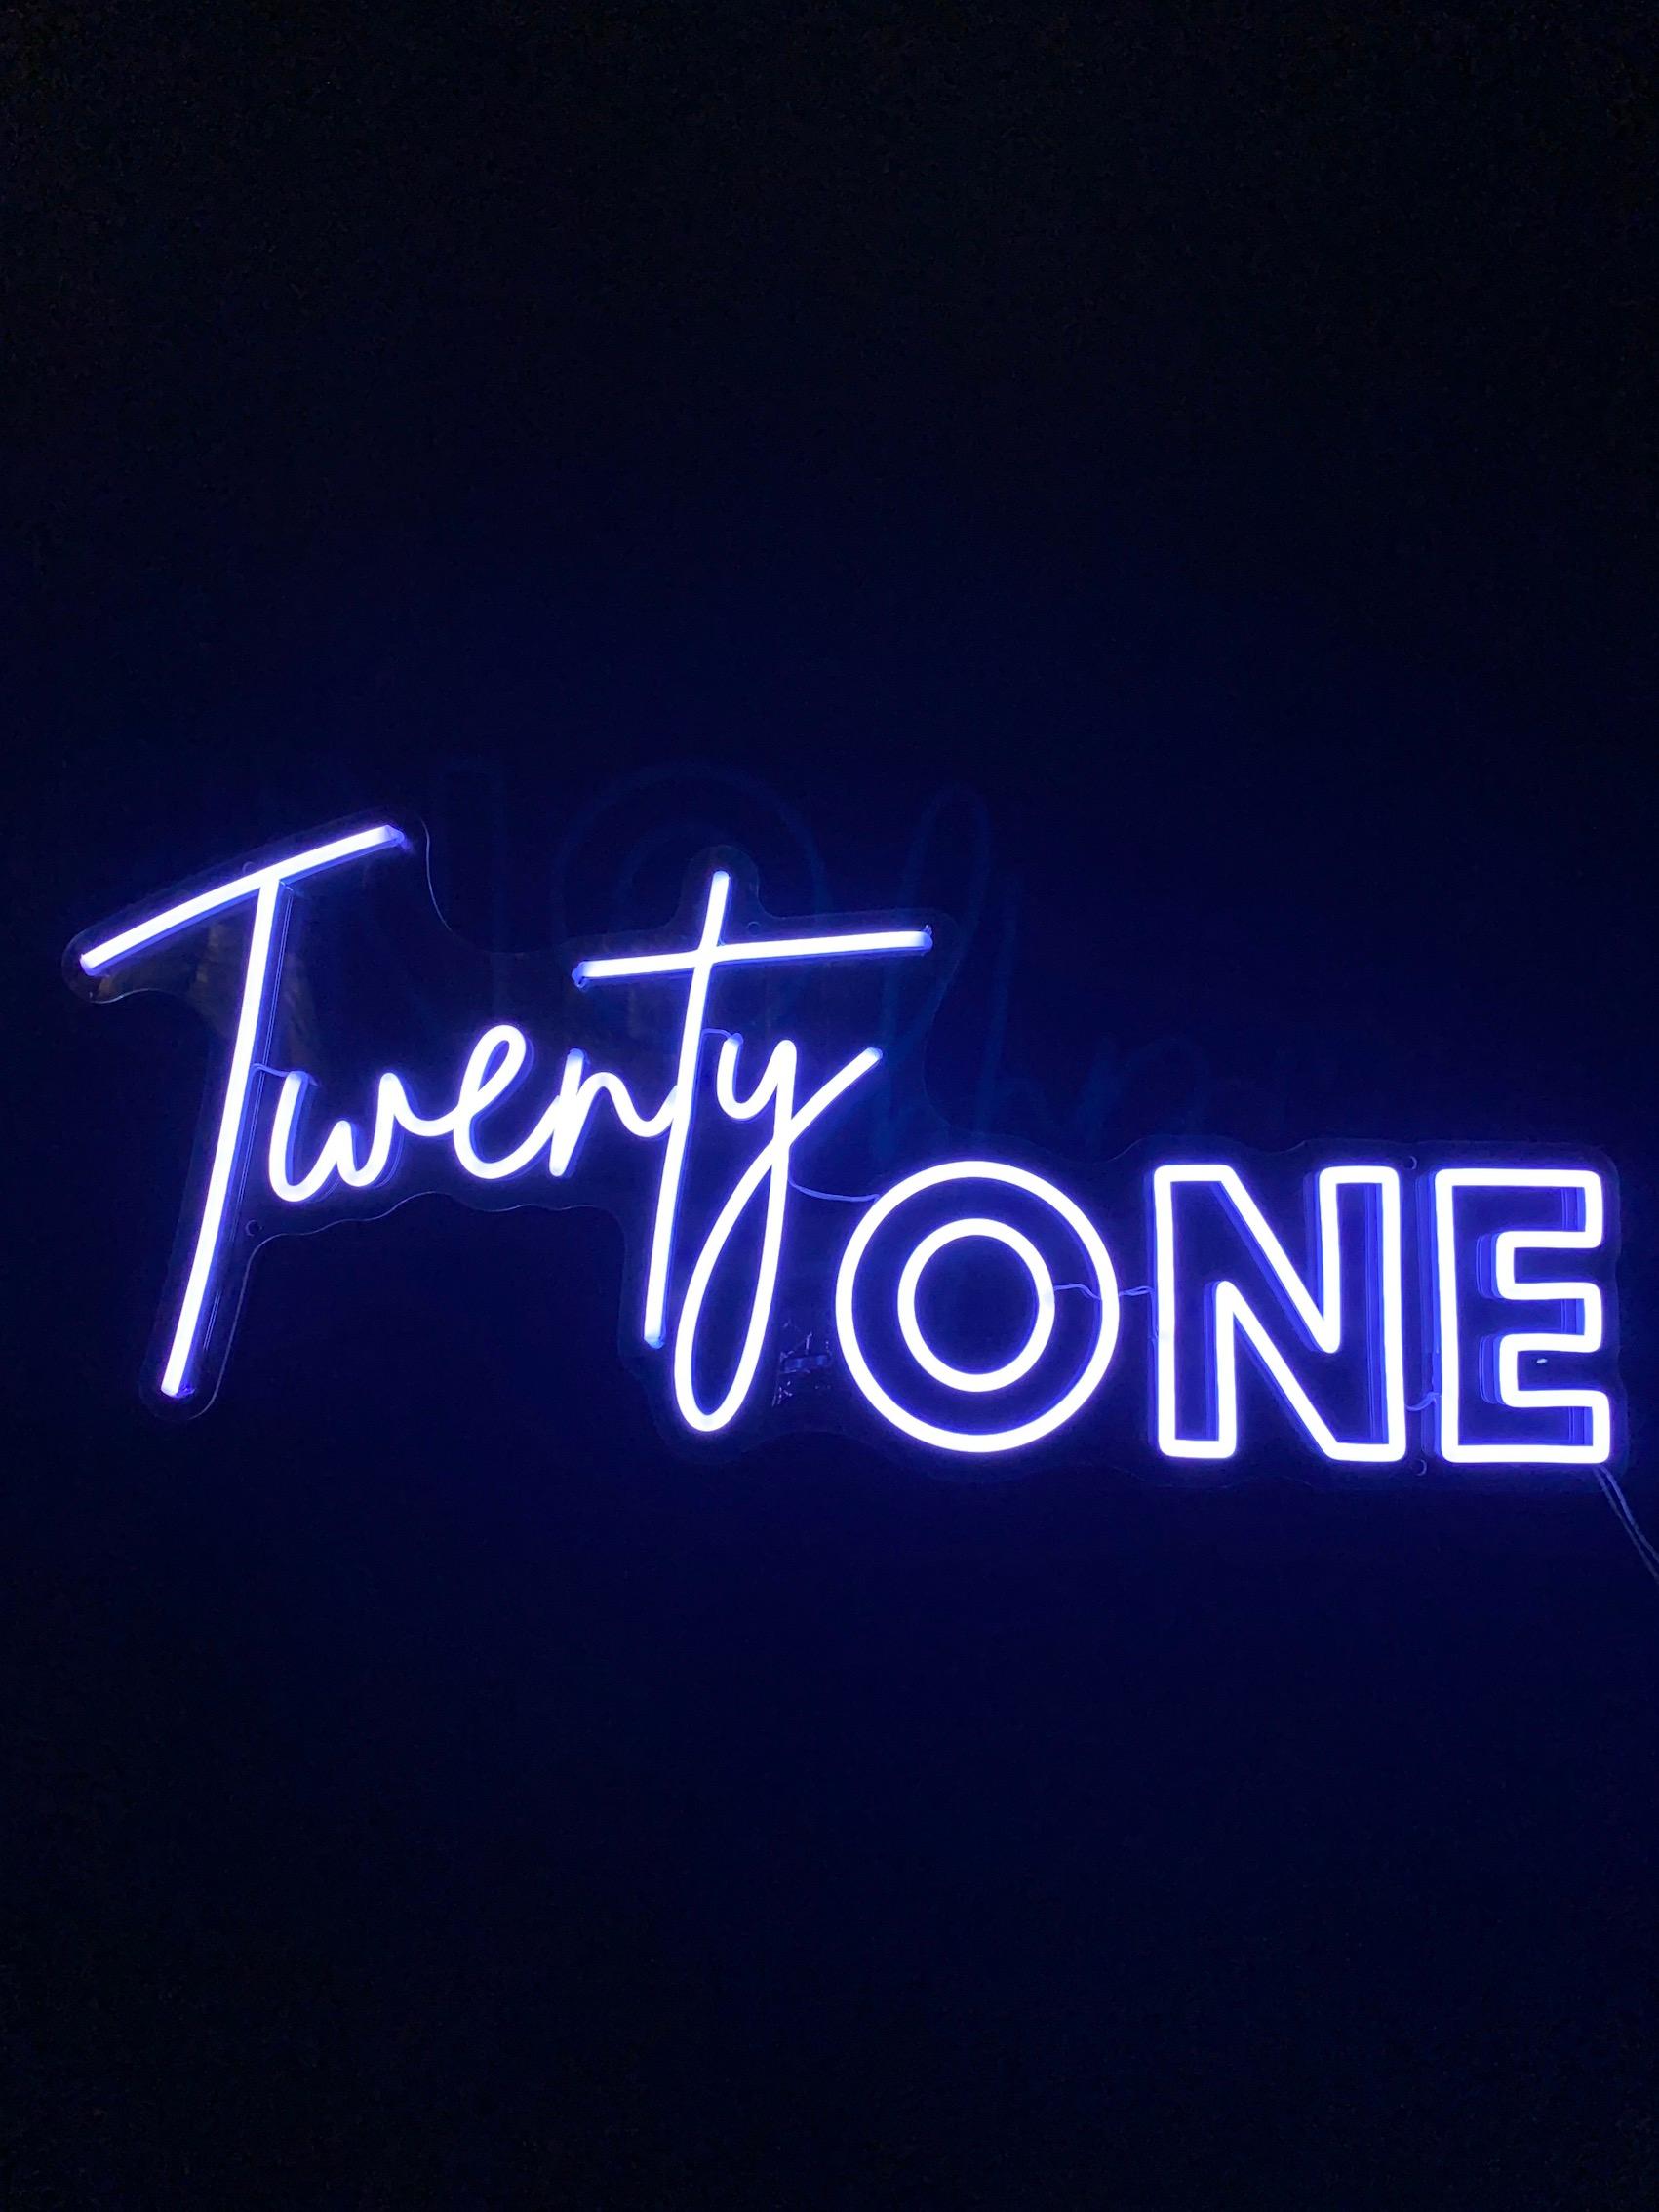 Twenty ONE neon sign